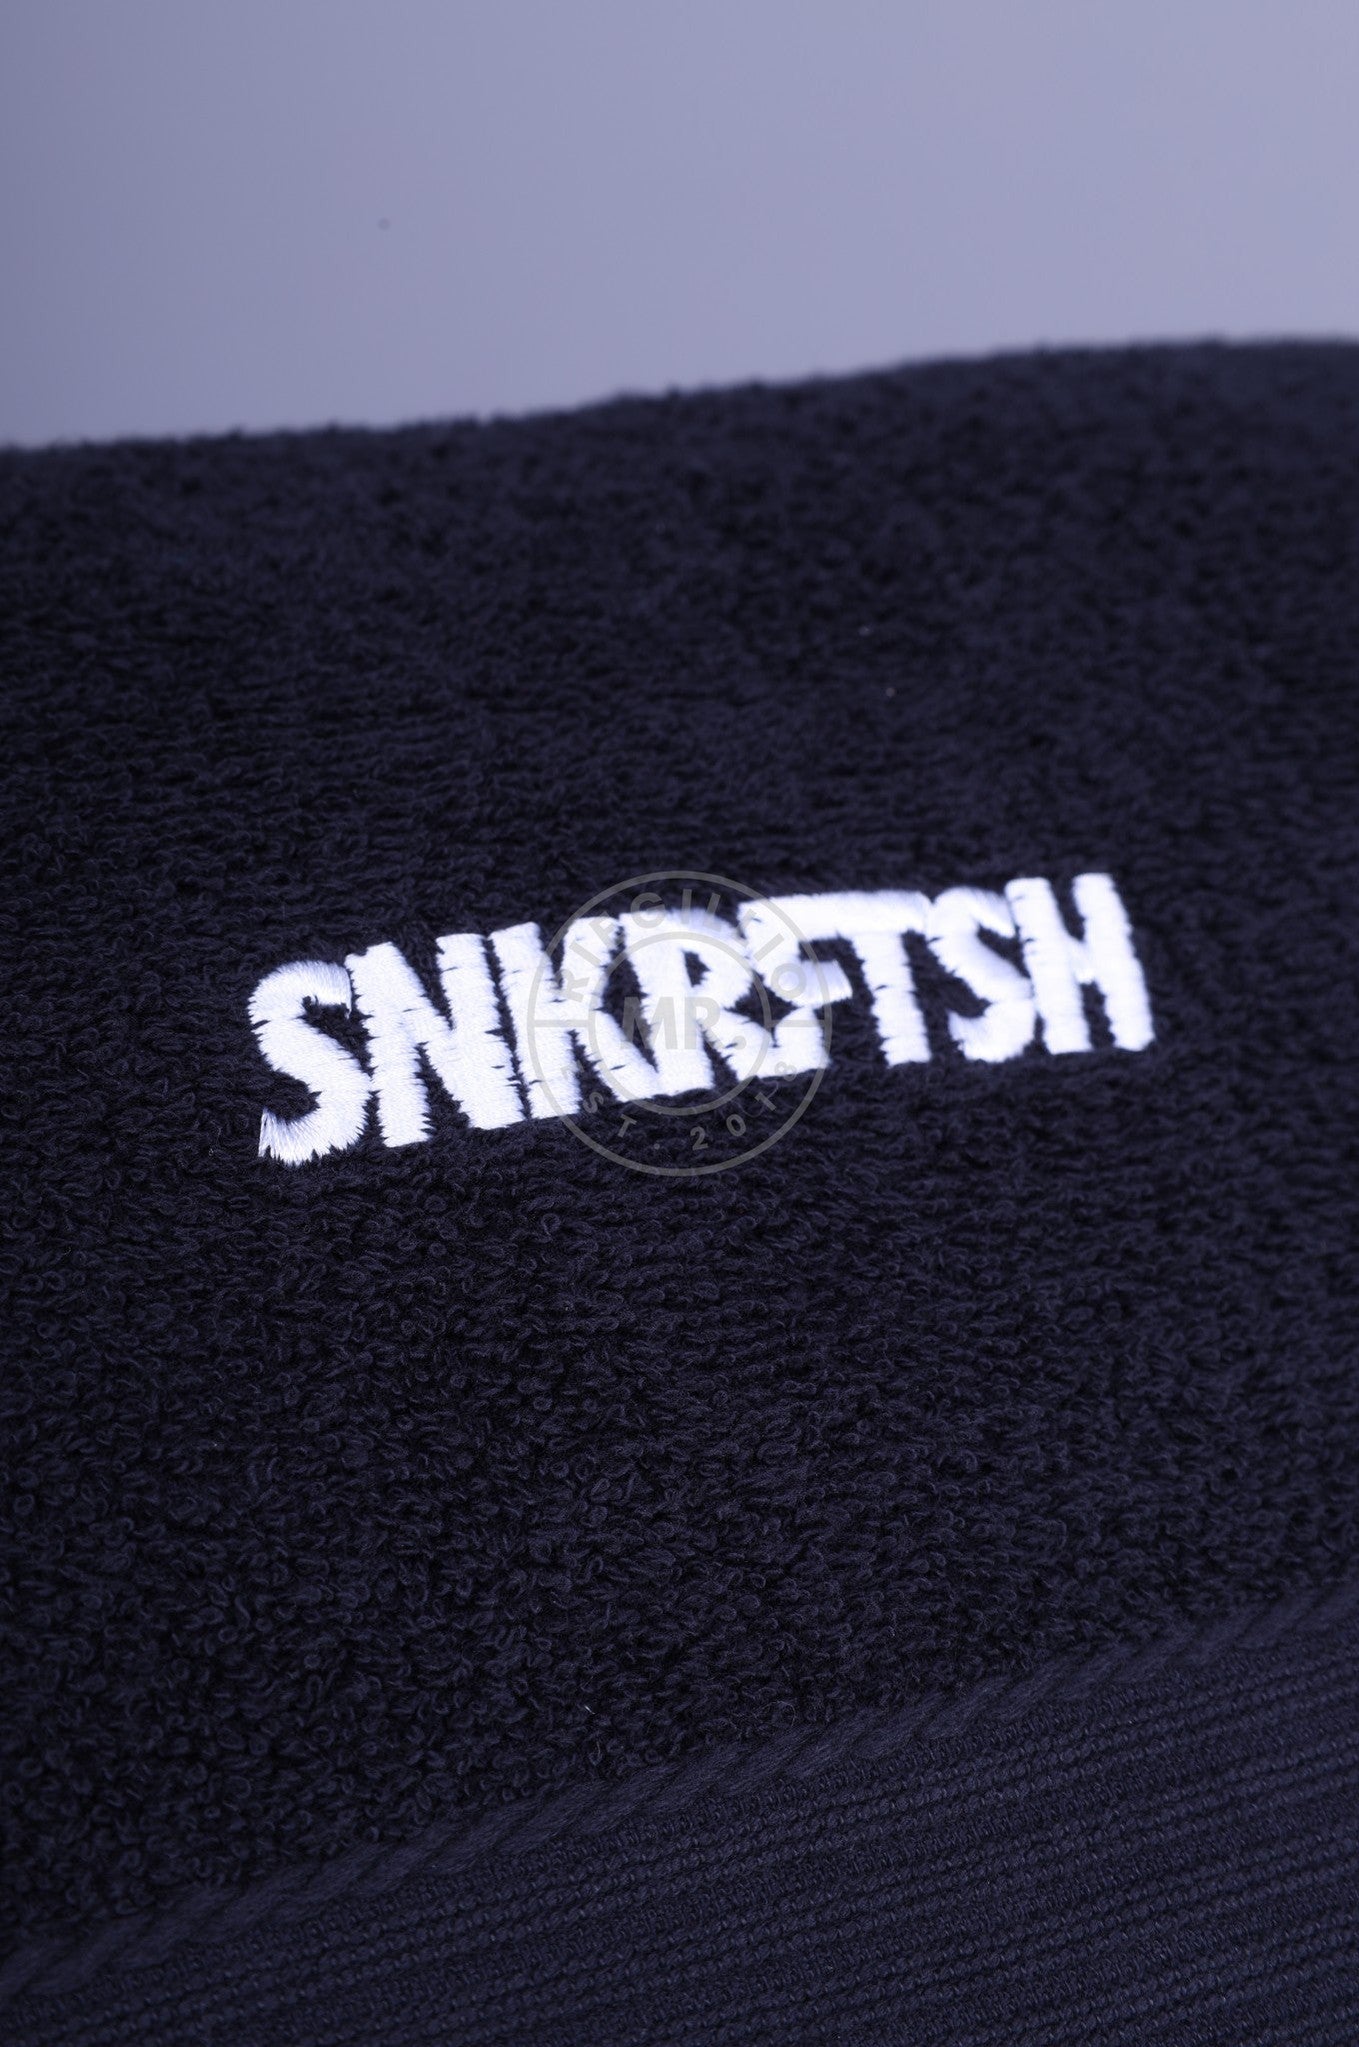 SNKRFTSH Beach Towel 180 x 100 cm